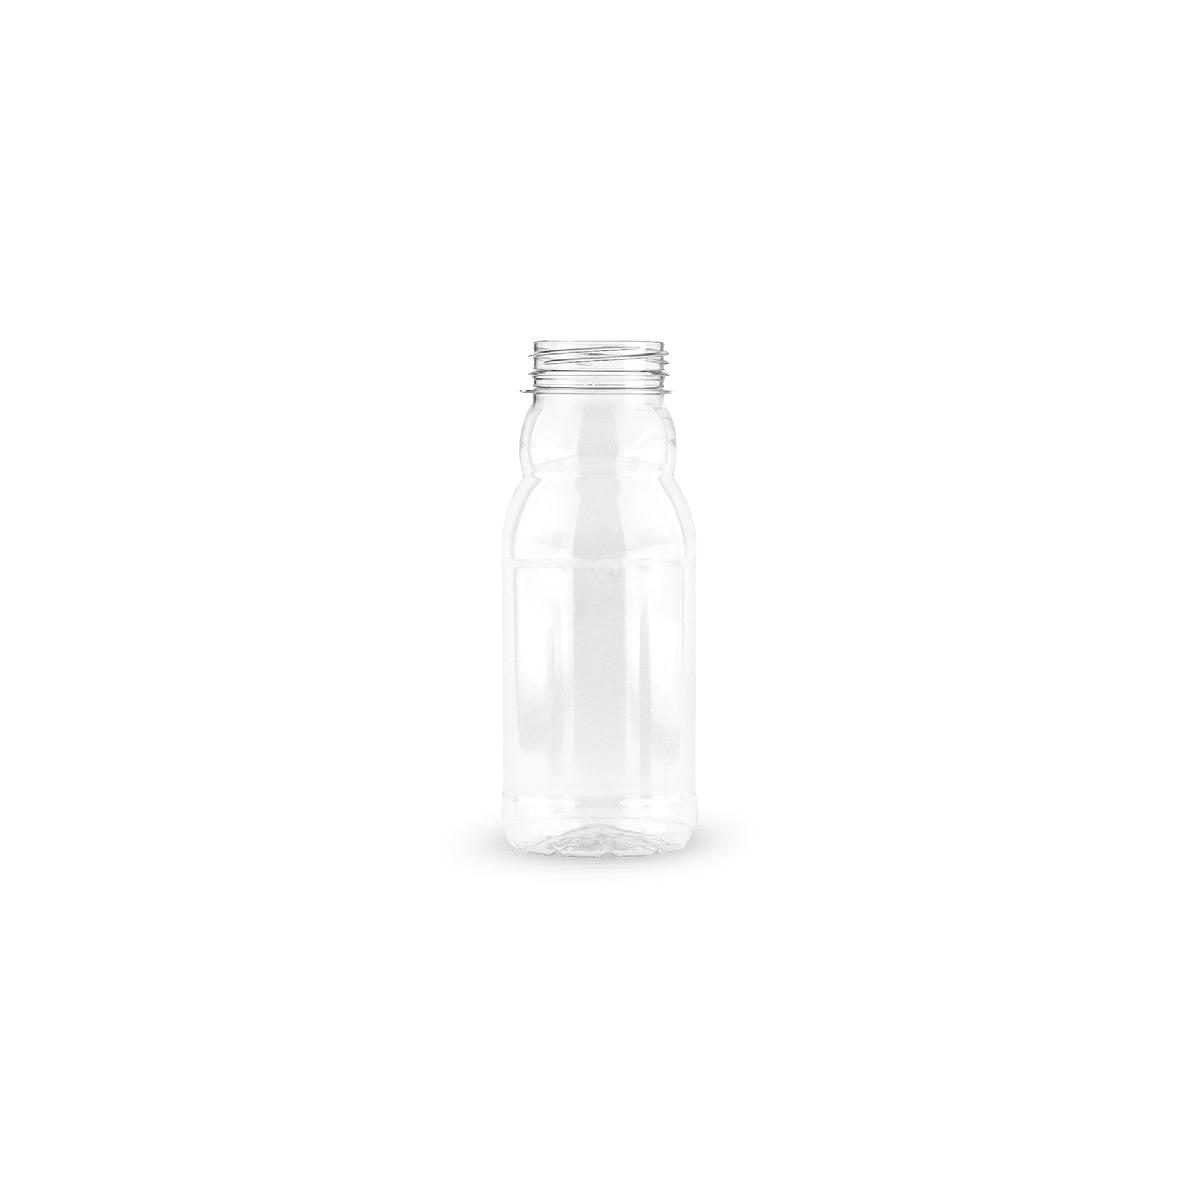 Бутылка ПЭТ 0,150л горло 38мм (широкое) прозрачная БЕЗ крышки (150)